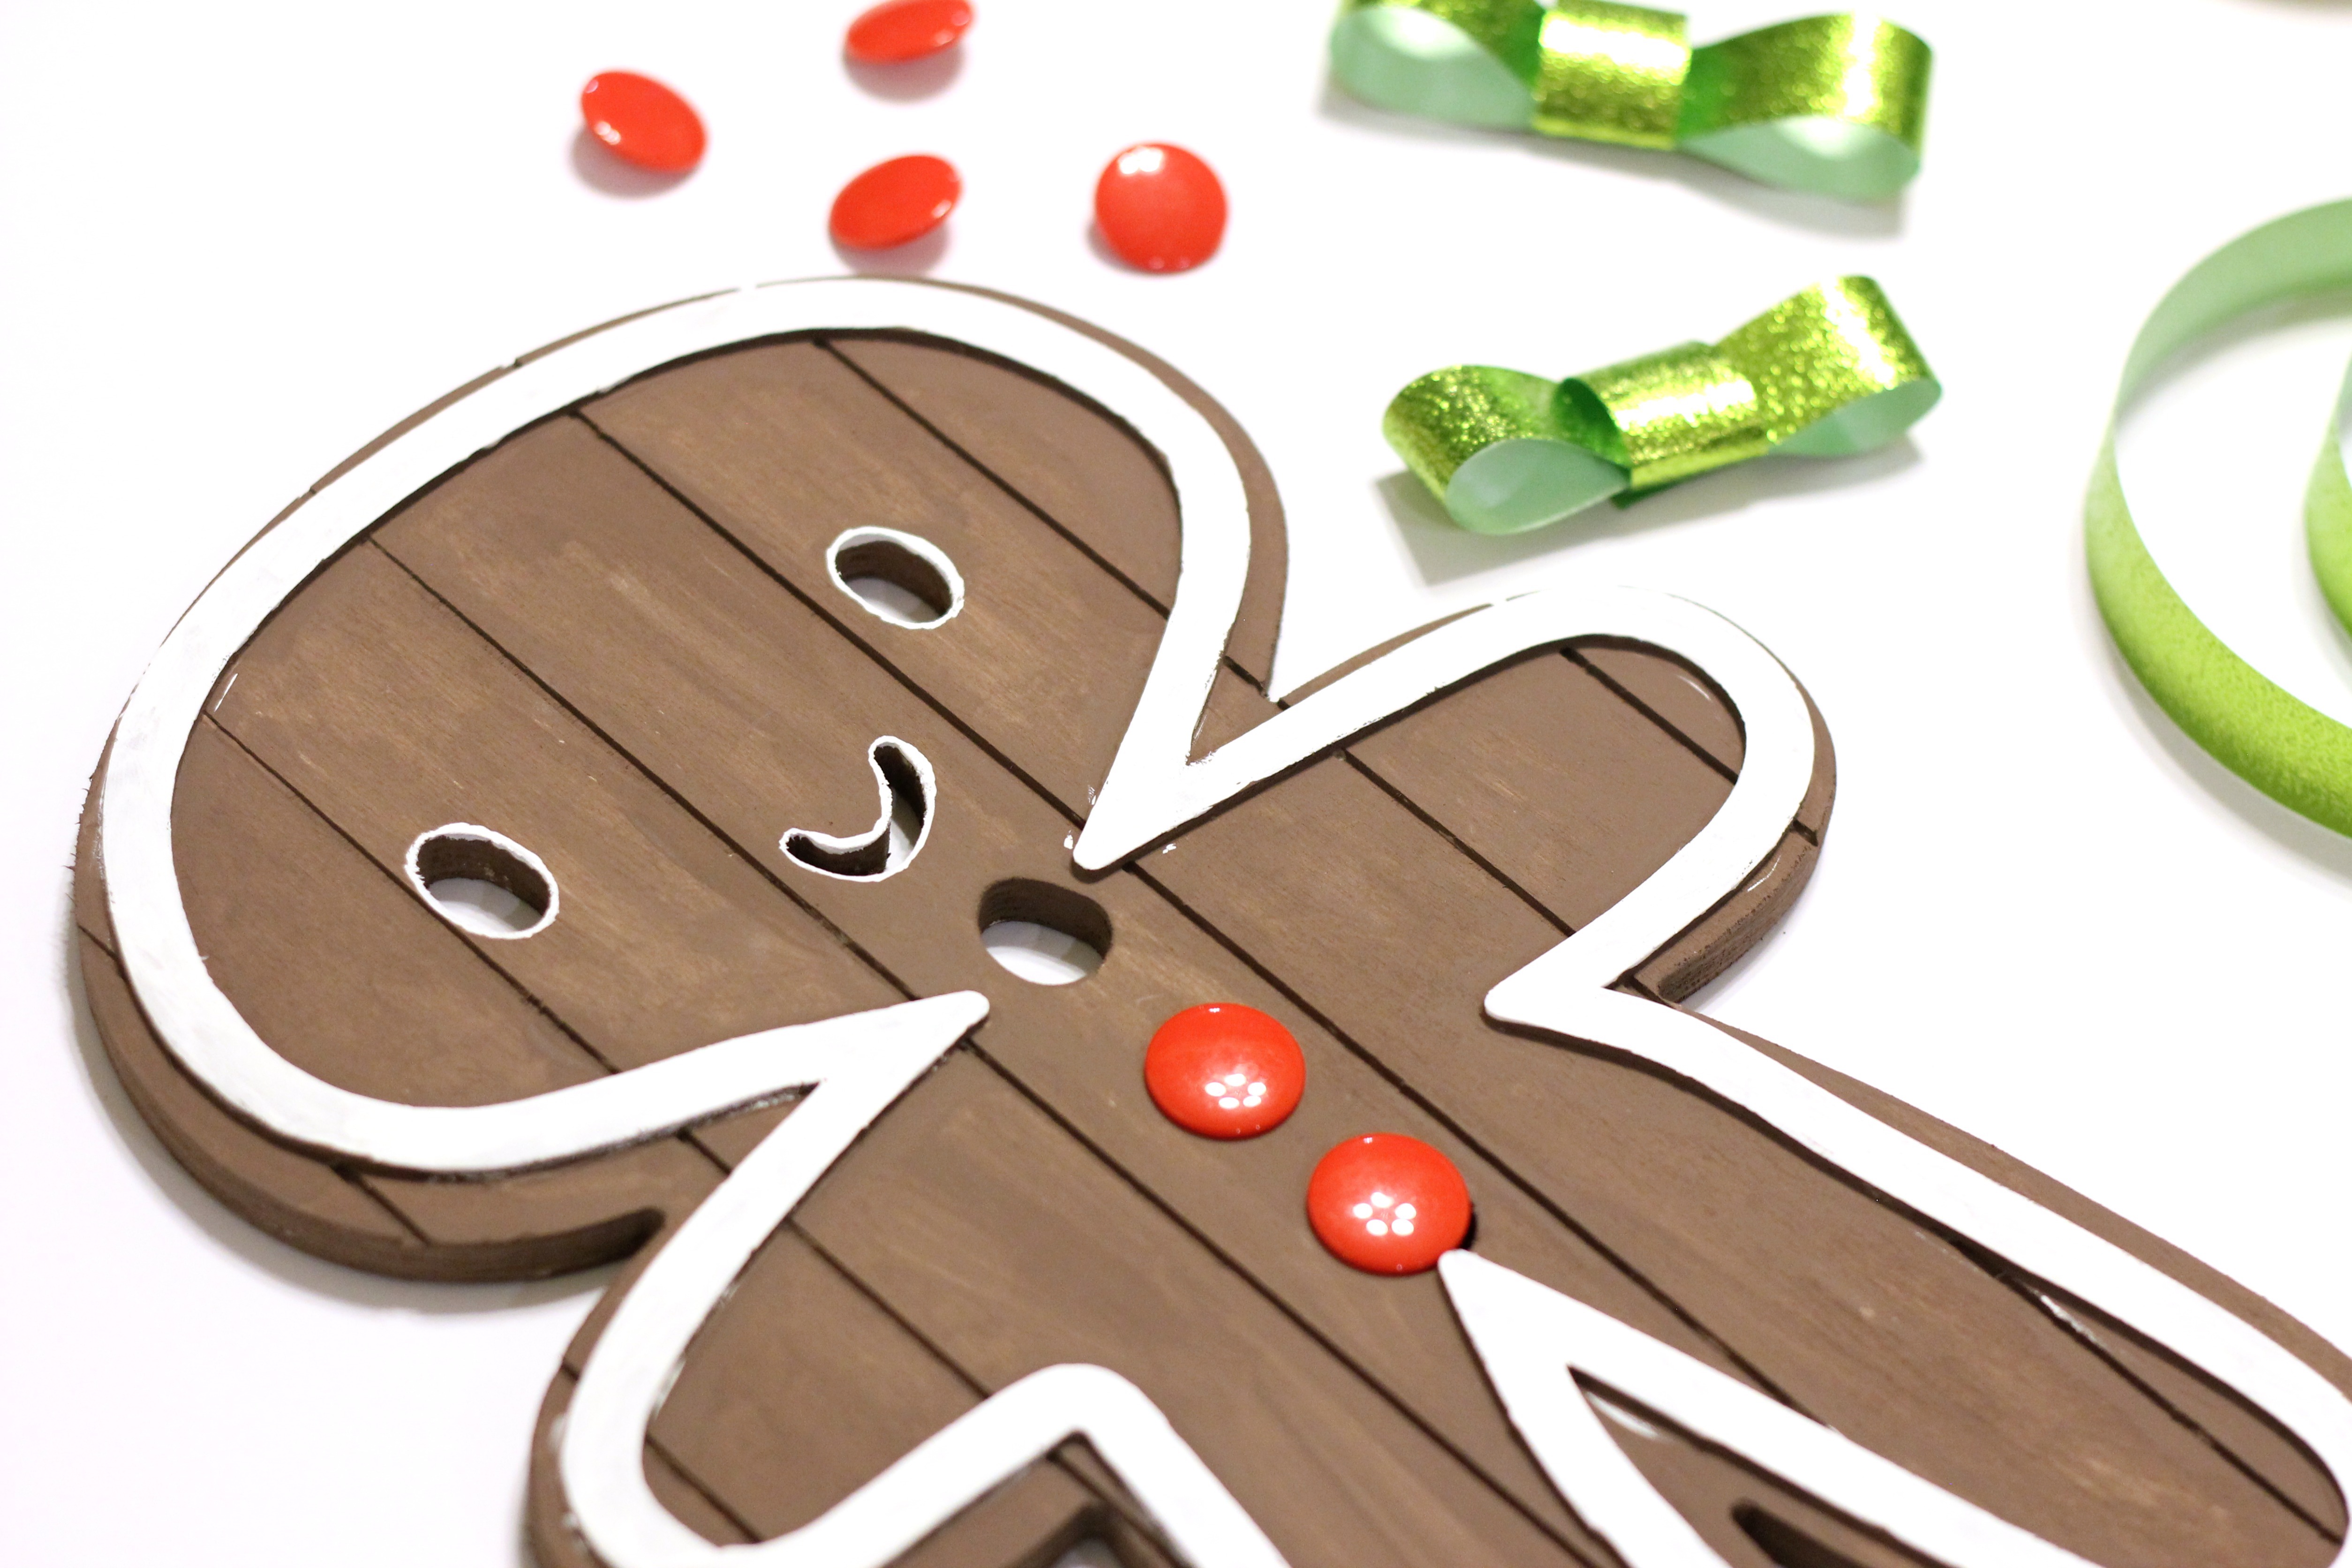 DIY Wood Gingerbread People - Supplies from Target